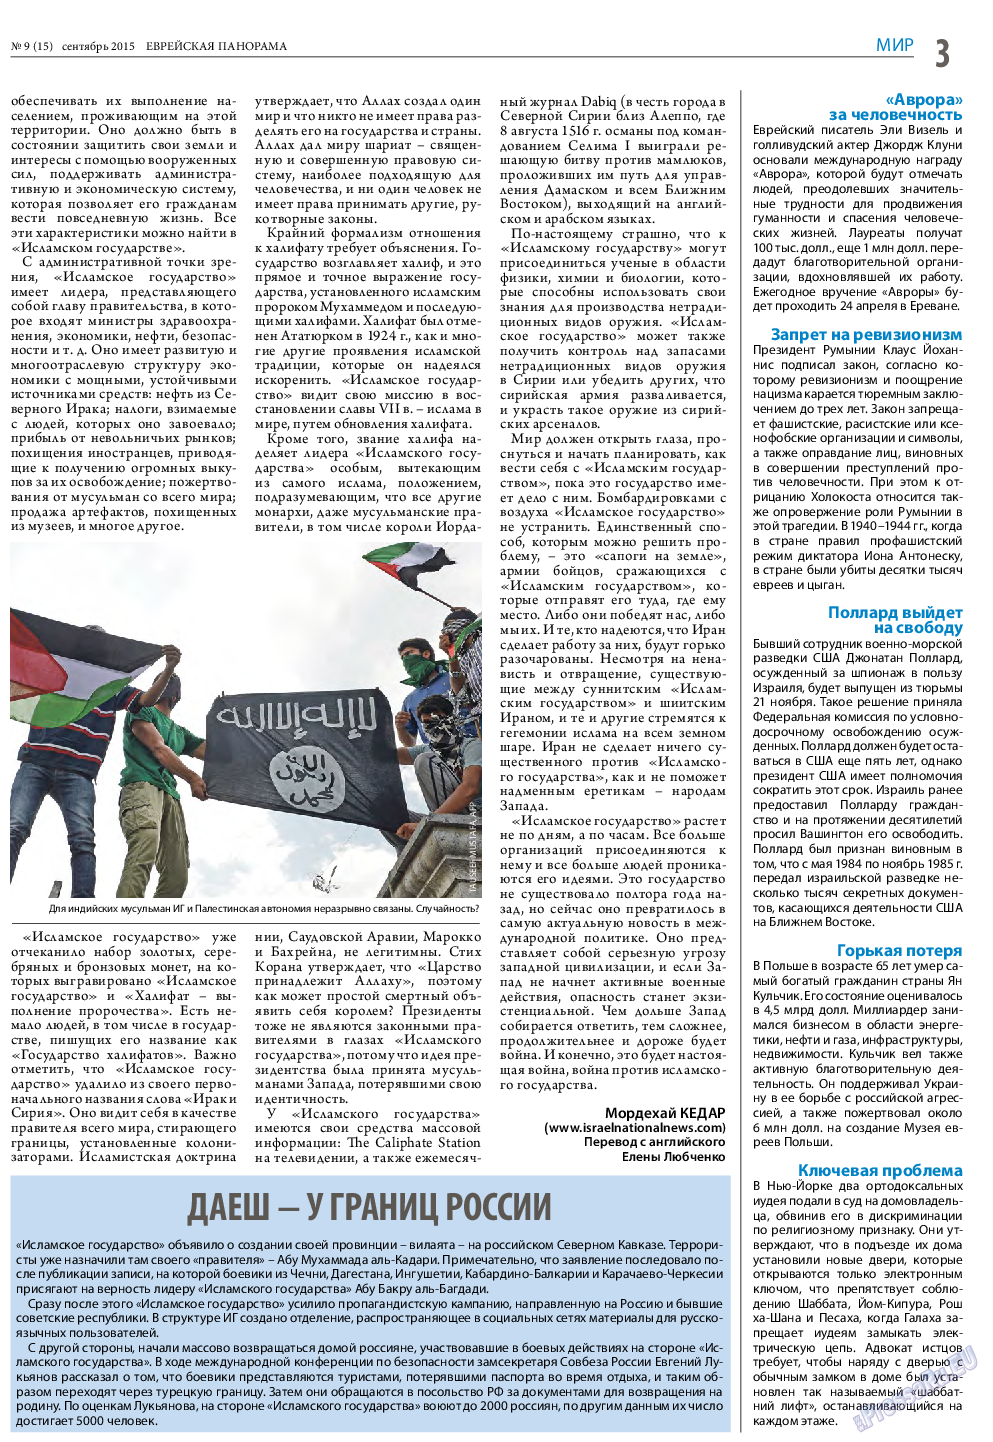 Еврейская панорама, газета. 2015 №9 стр.3